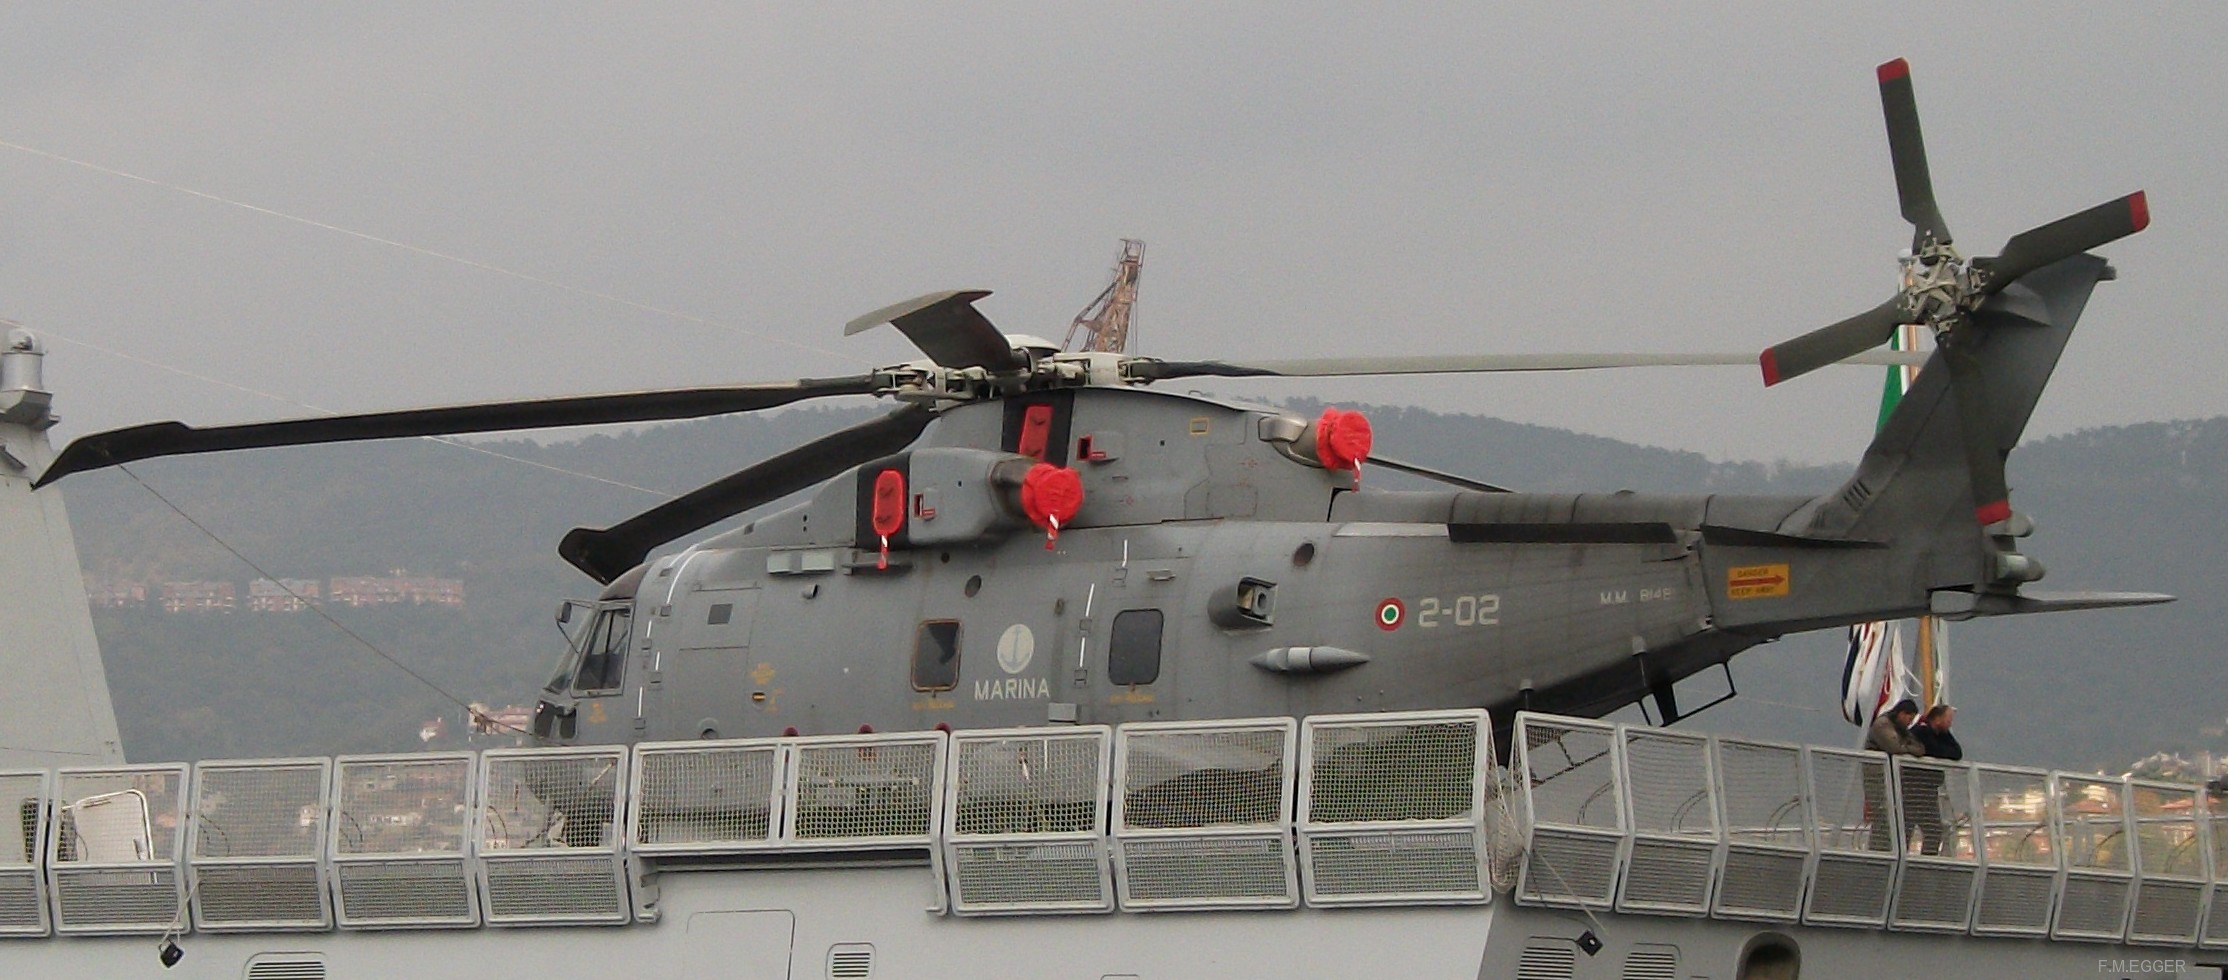 f-591 virginio fasan frigate italian navy marine militare 24 agusta westland leonardo sh-101a eh101 helicopter